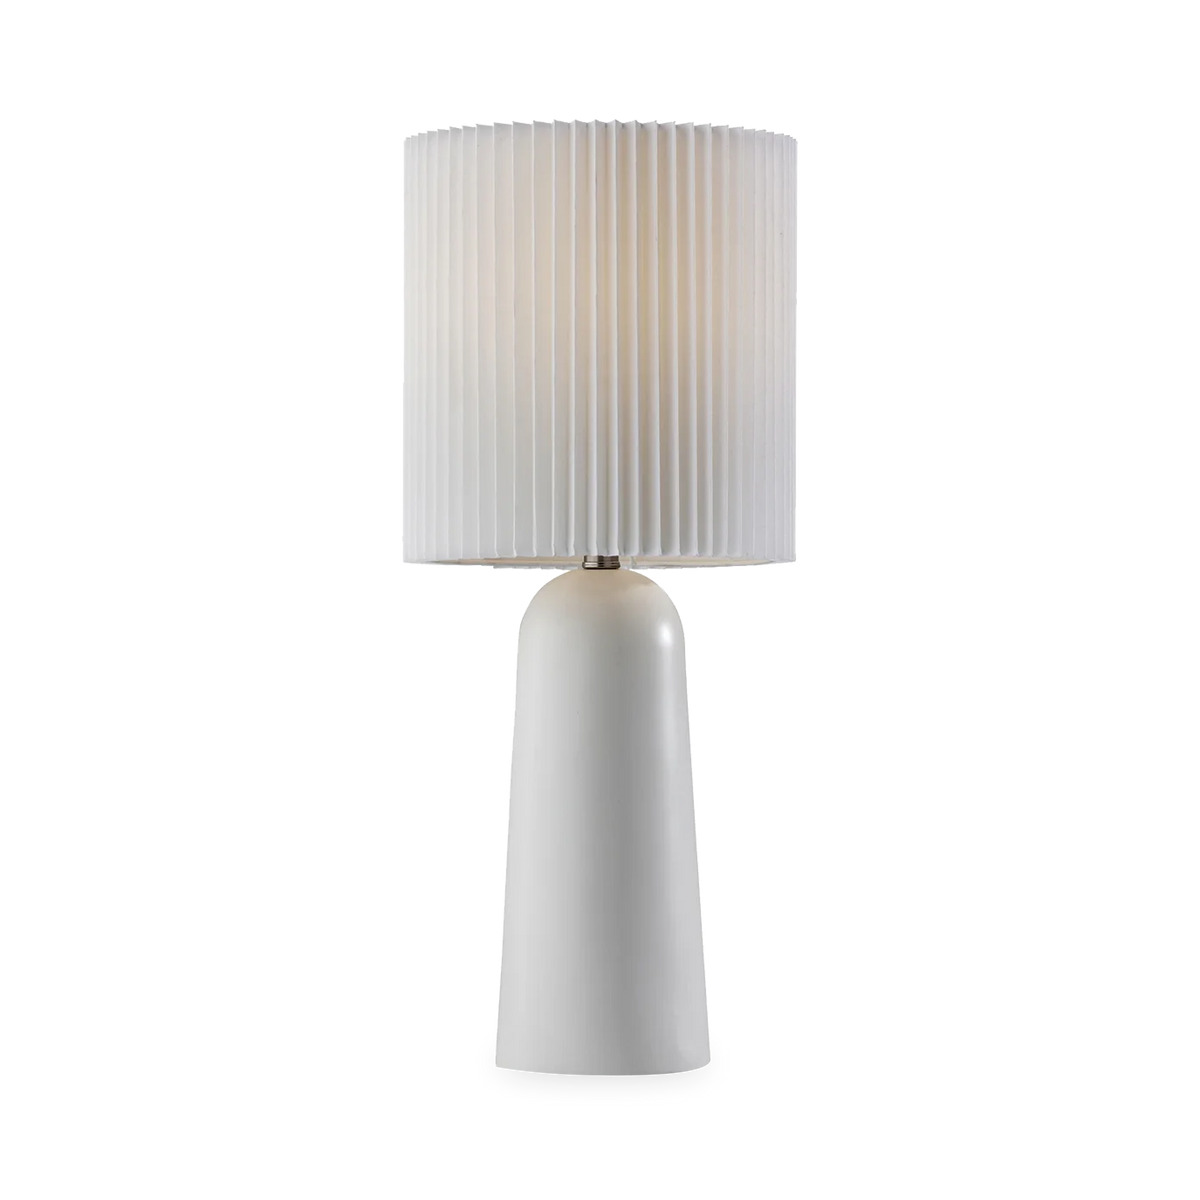 The Callie Table Lamp creates an elegant atmosphere wherever it resides.